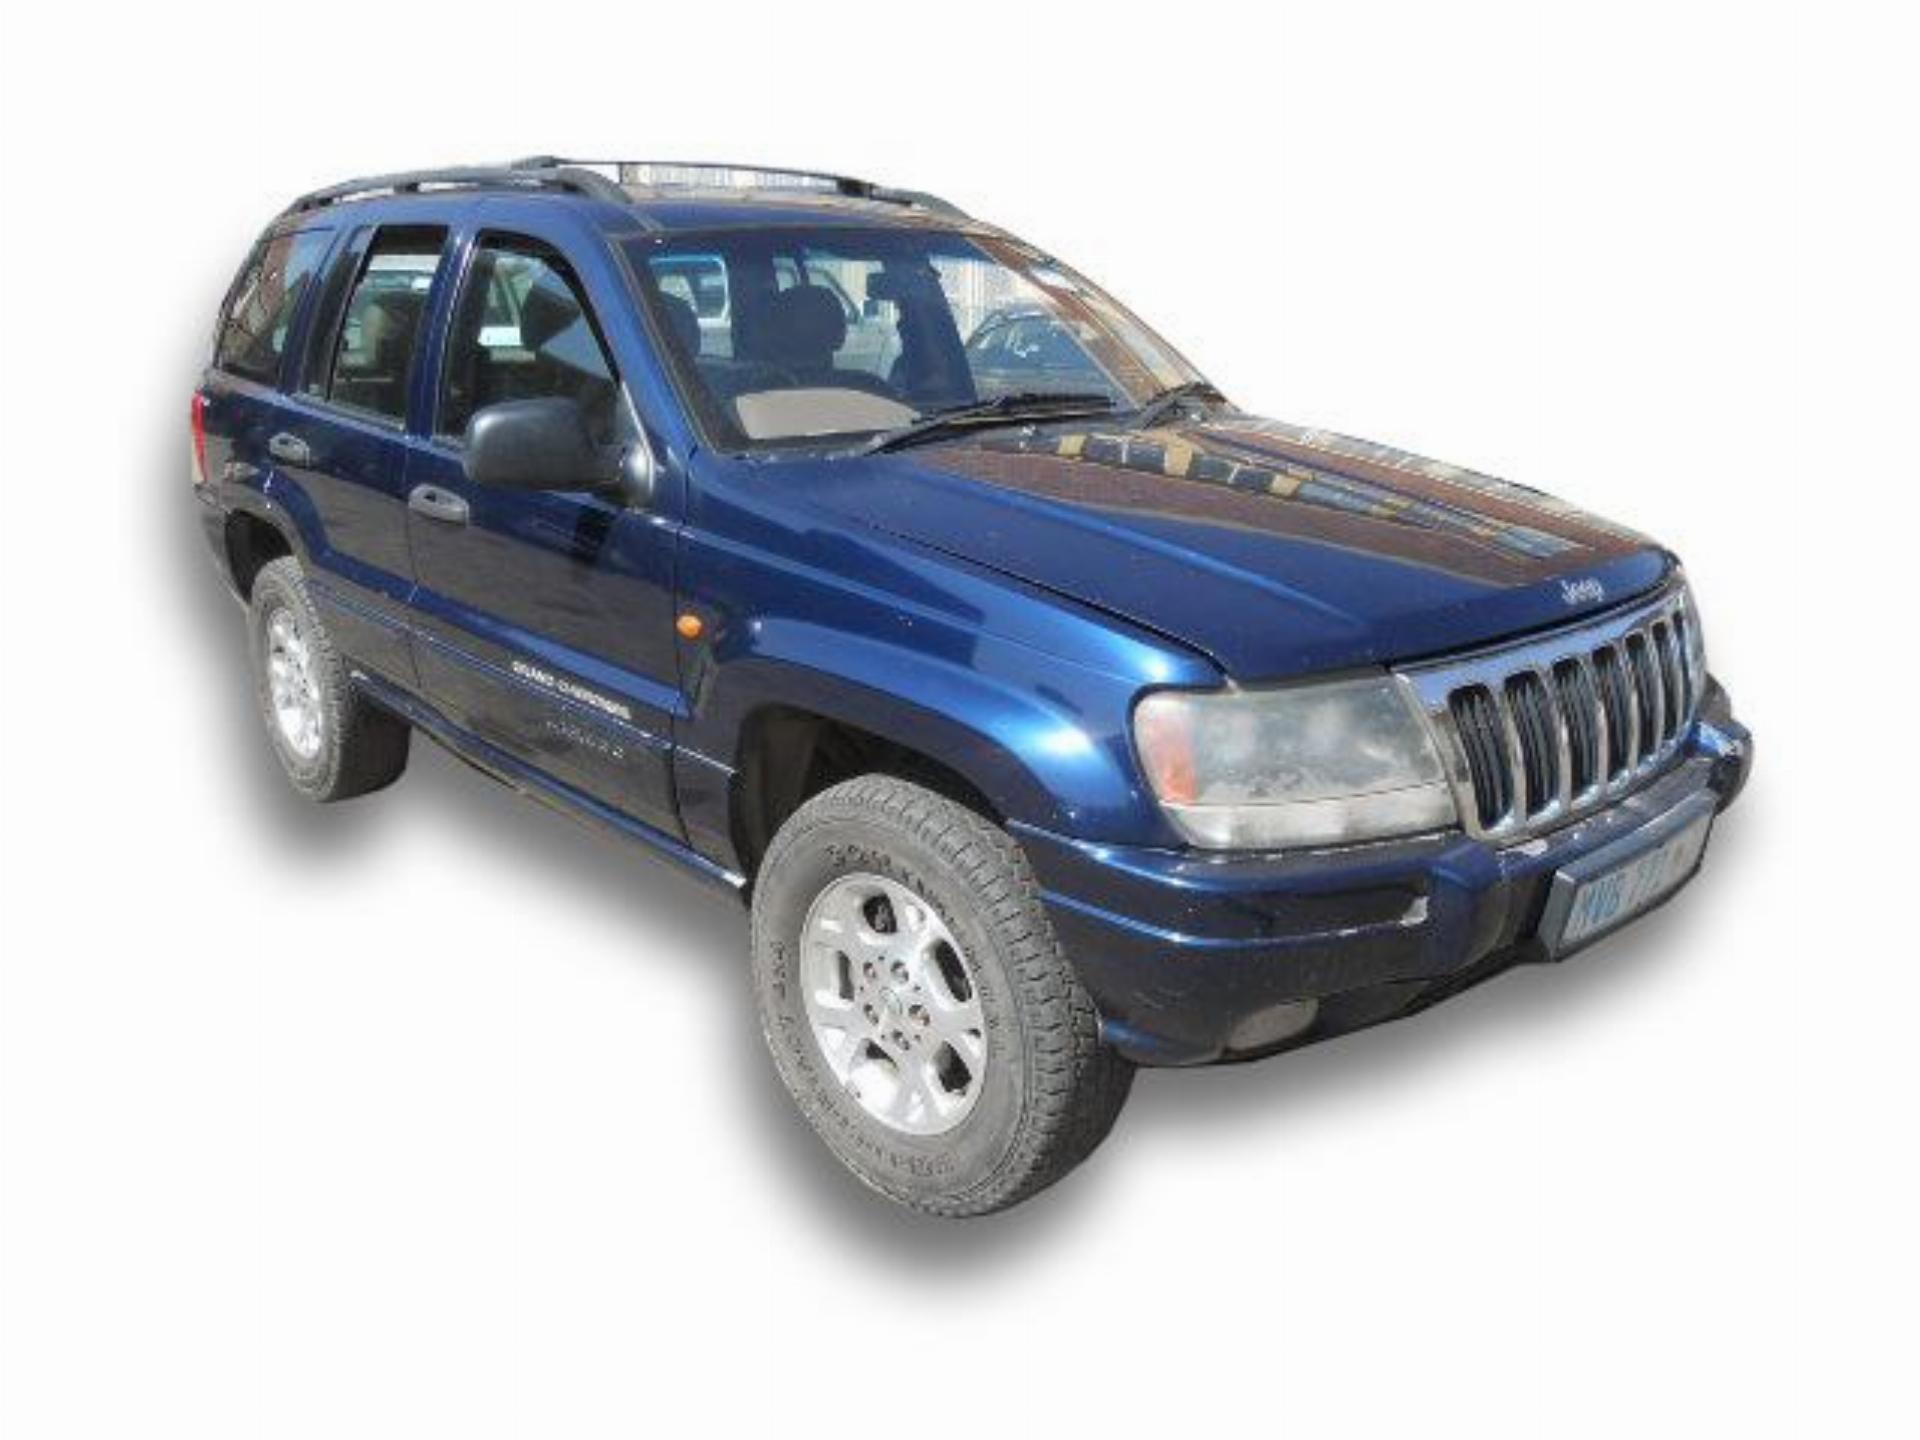 Repossessed Jeep Grand Cherokee 3.1 TD Lare 2001 on